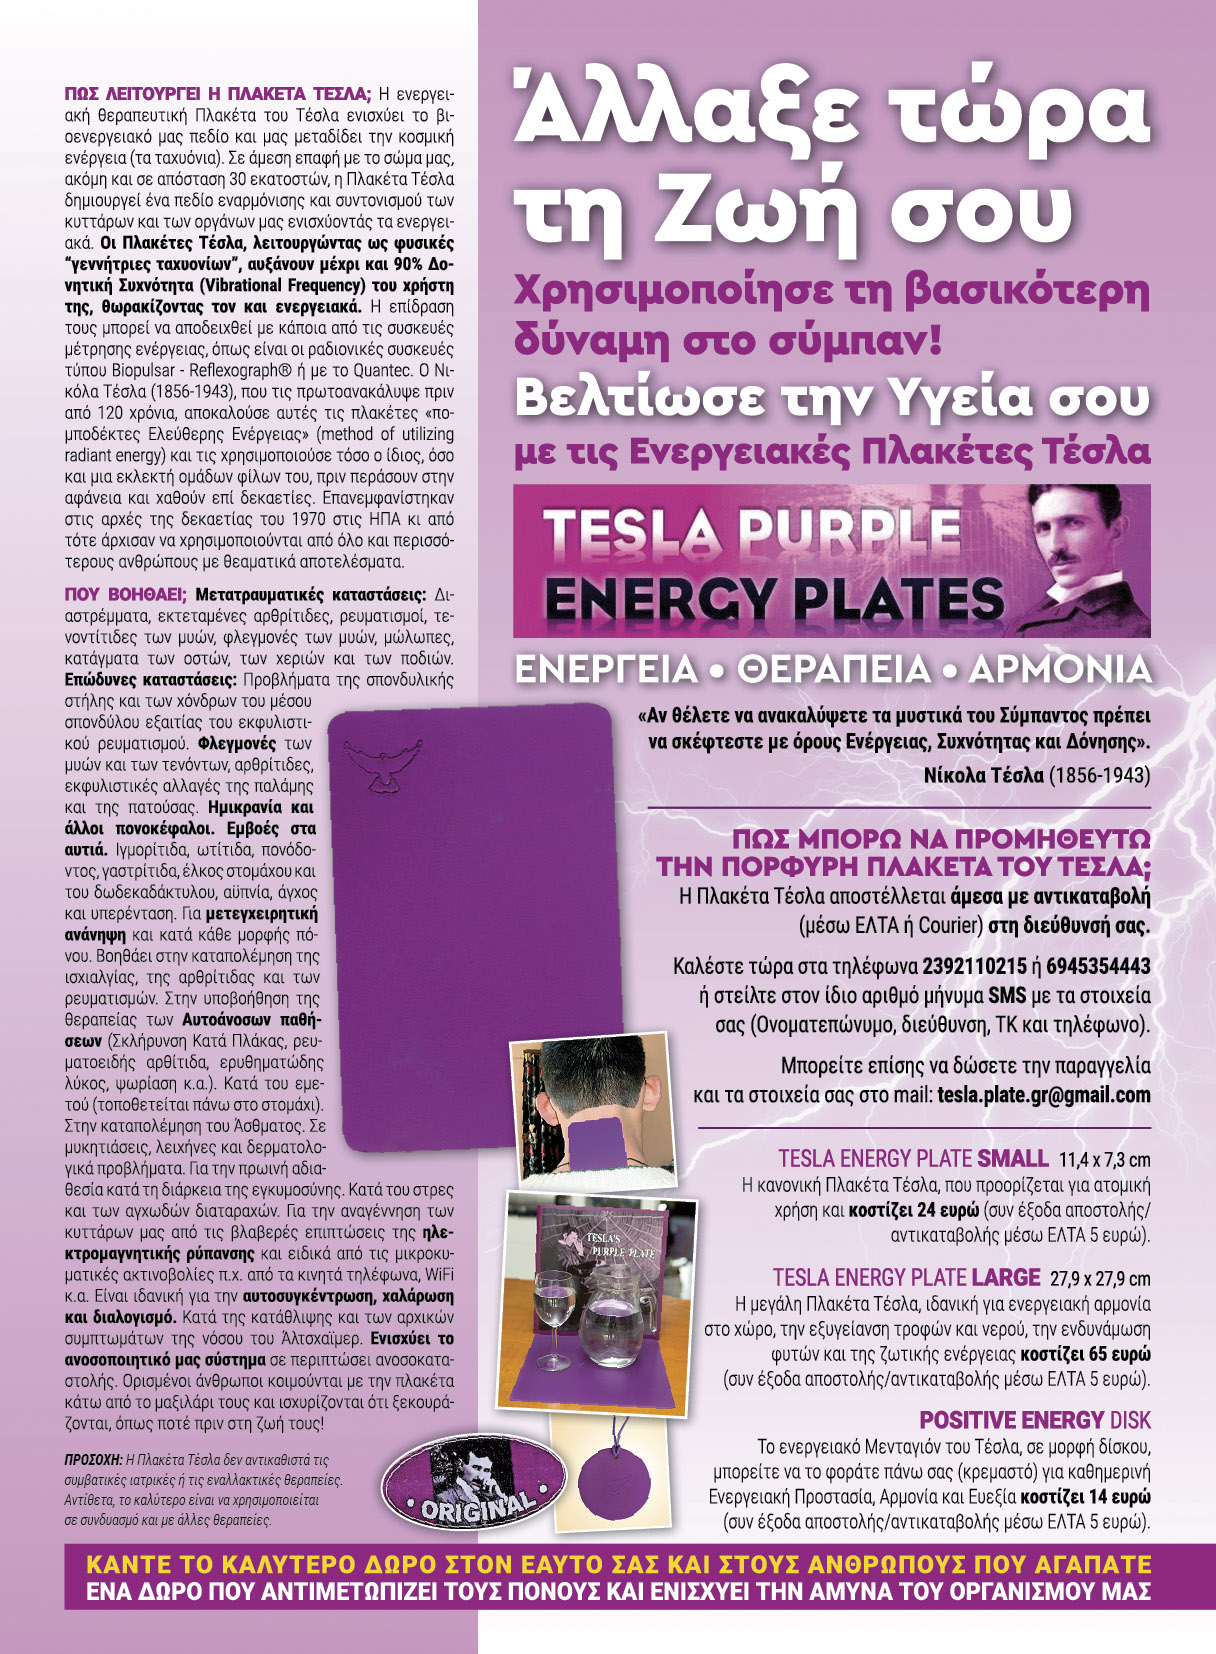 Tesla Plate AD